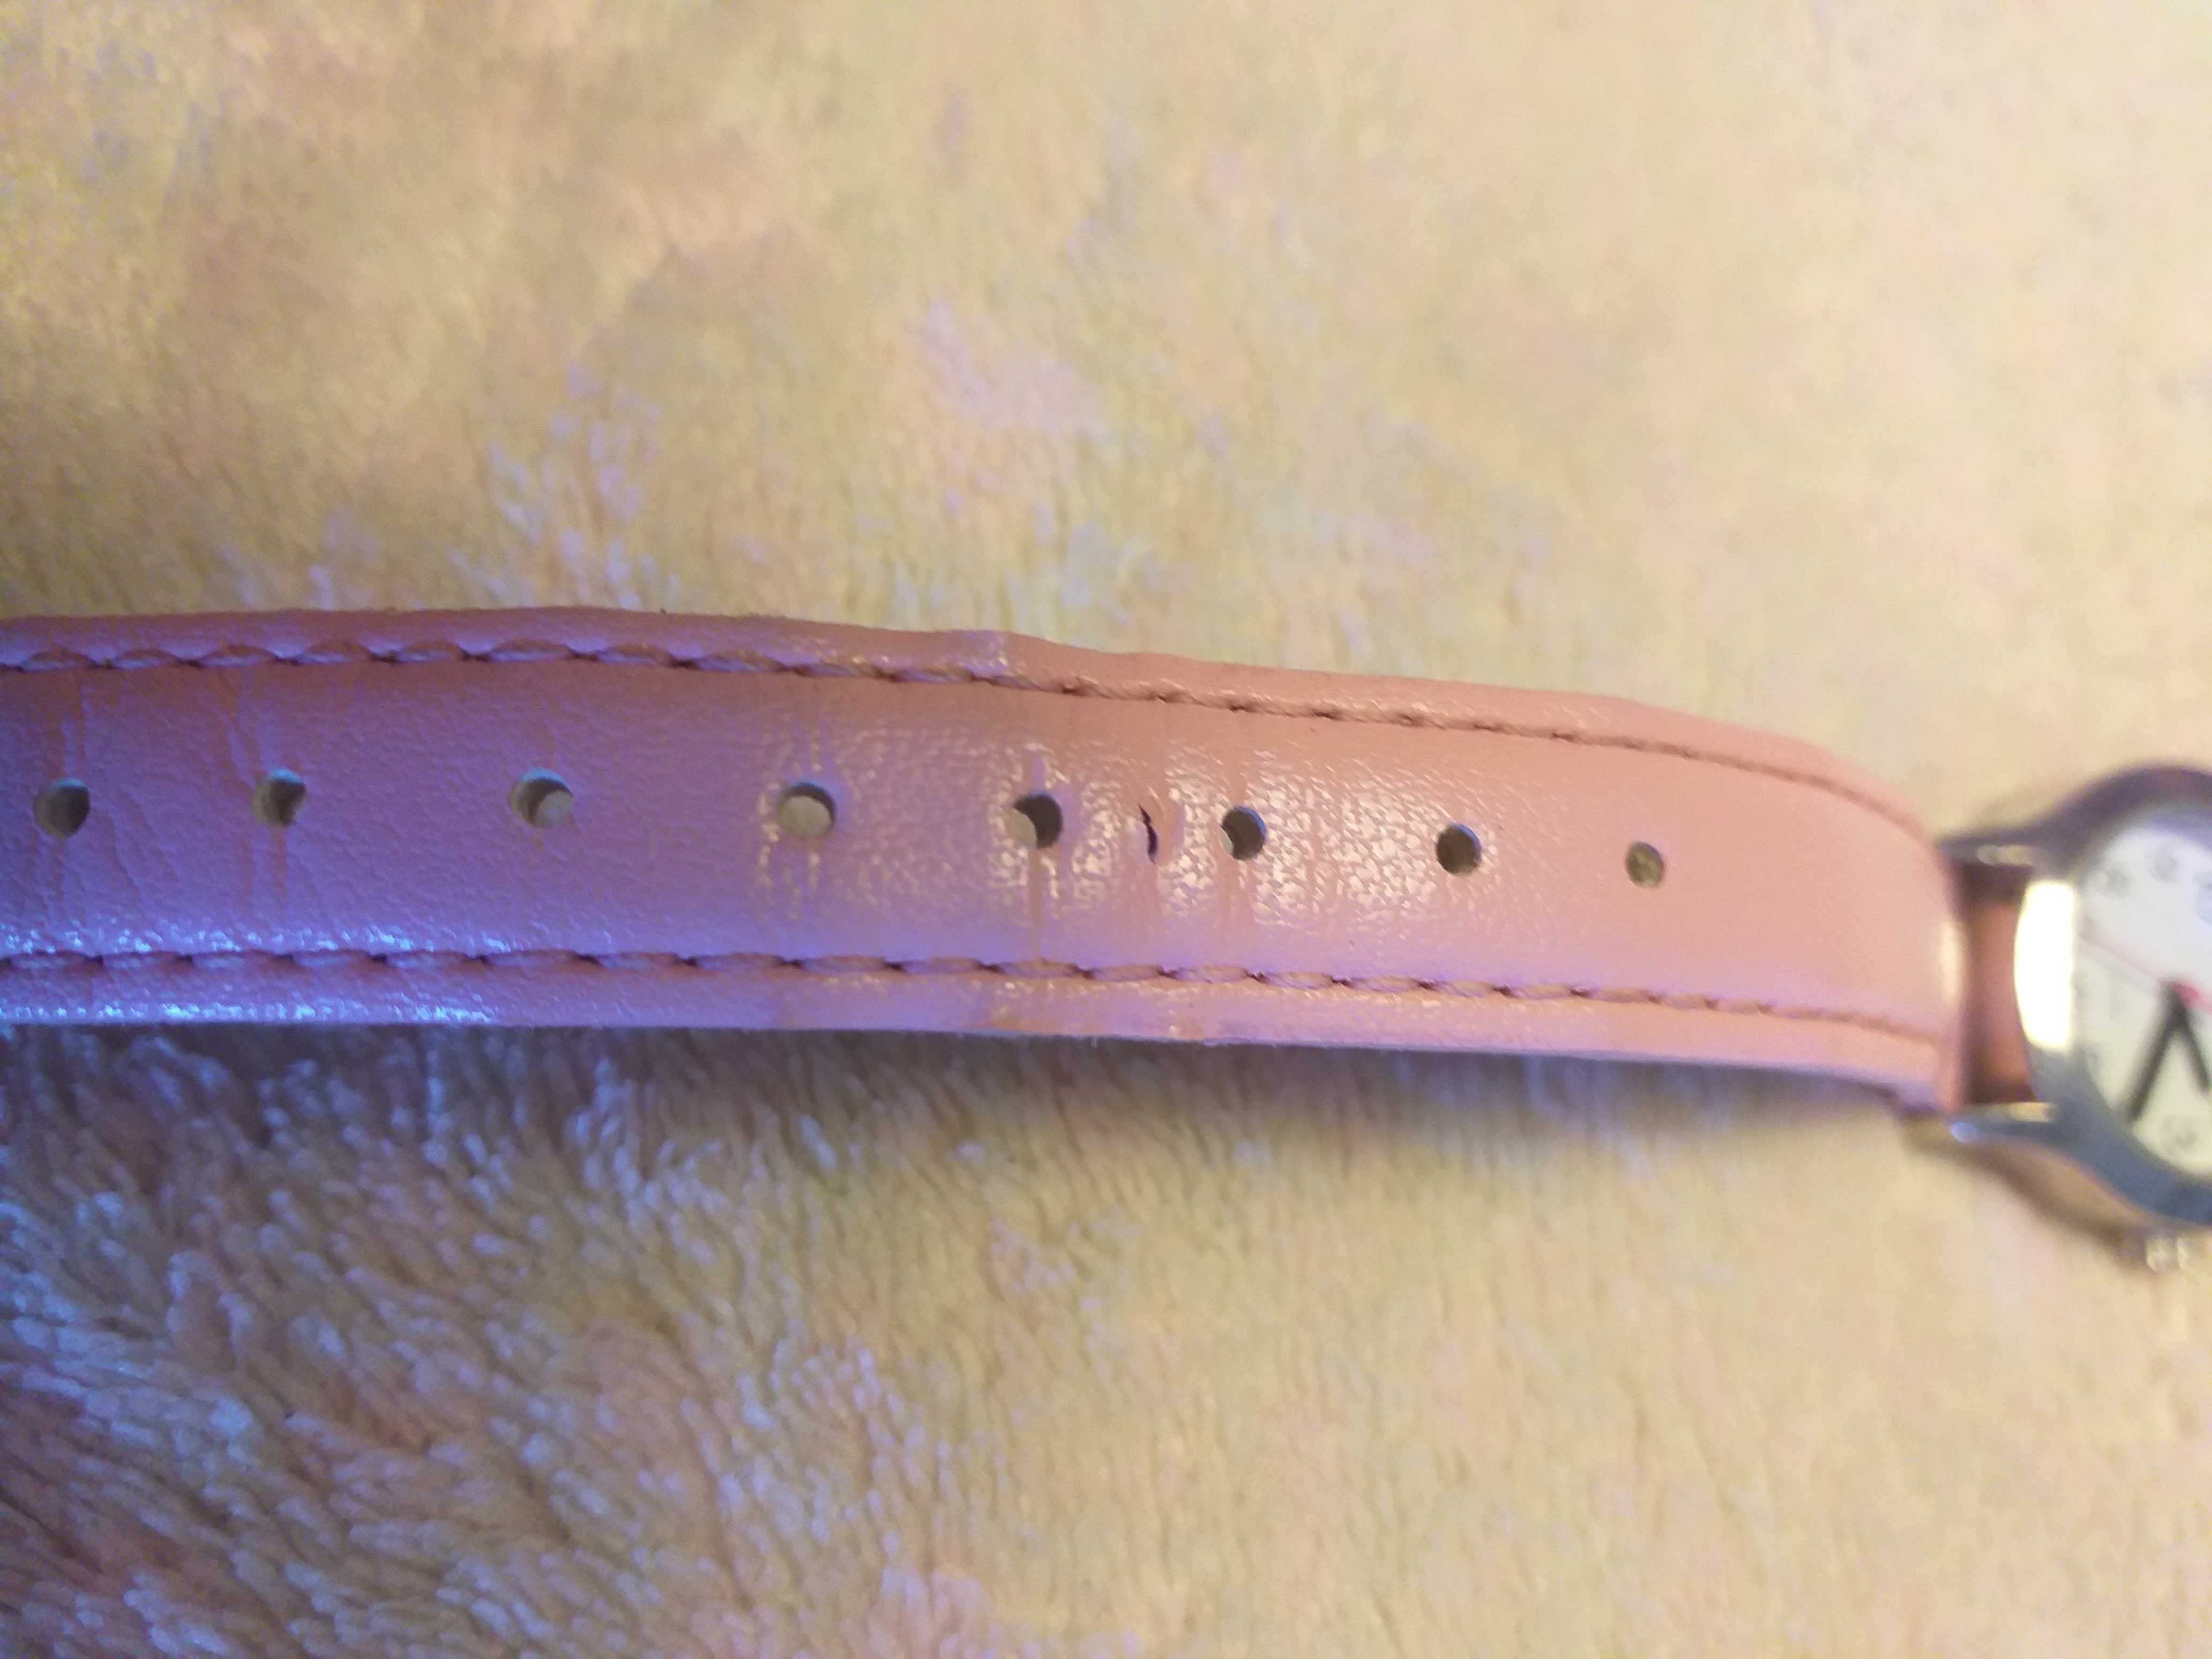 Zegarek Timex 24mm Pink Kwarcowy